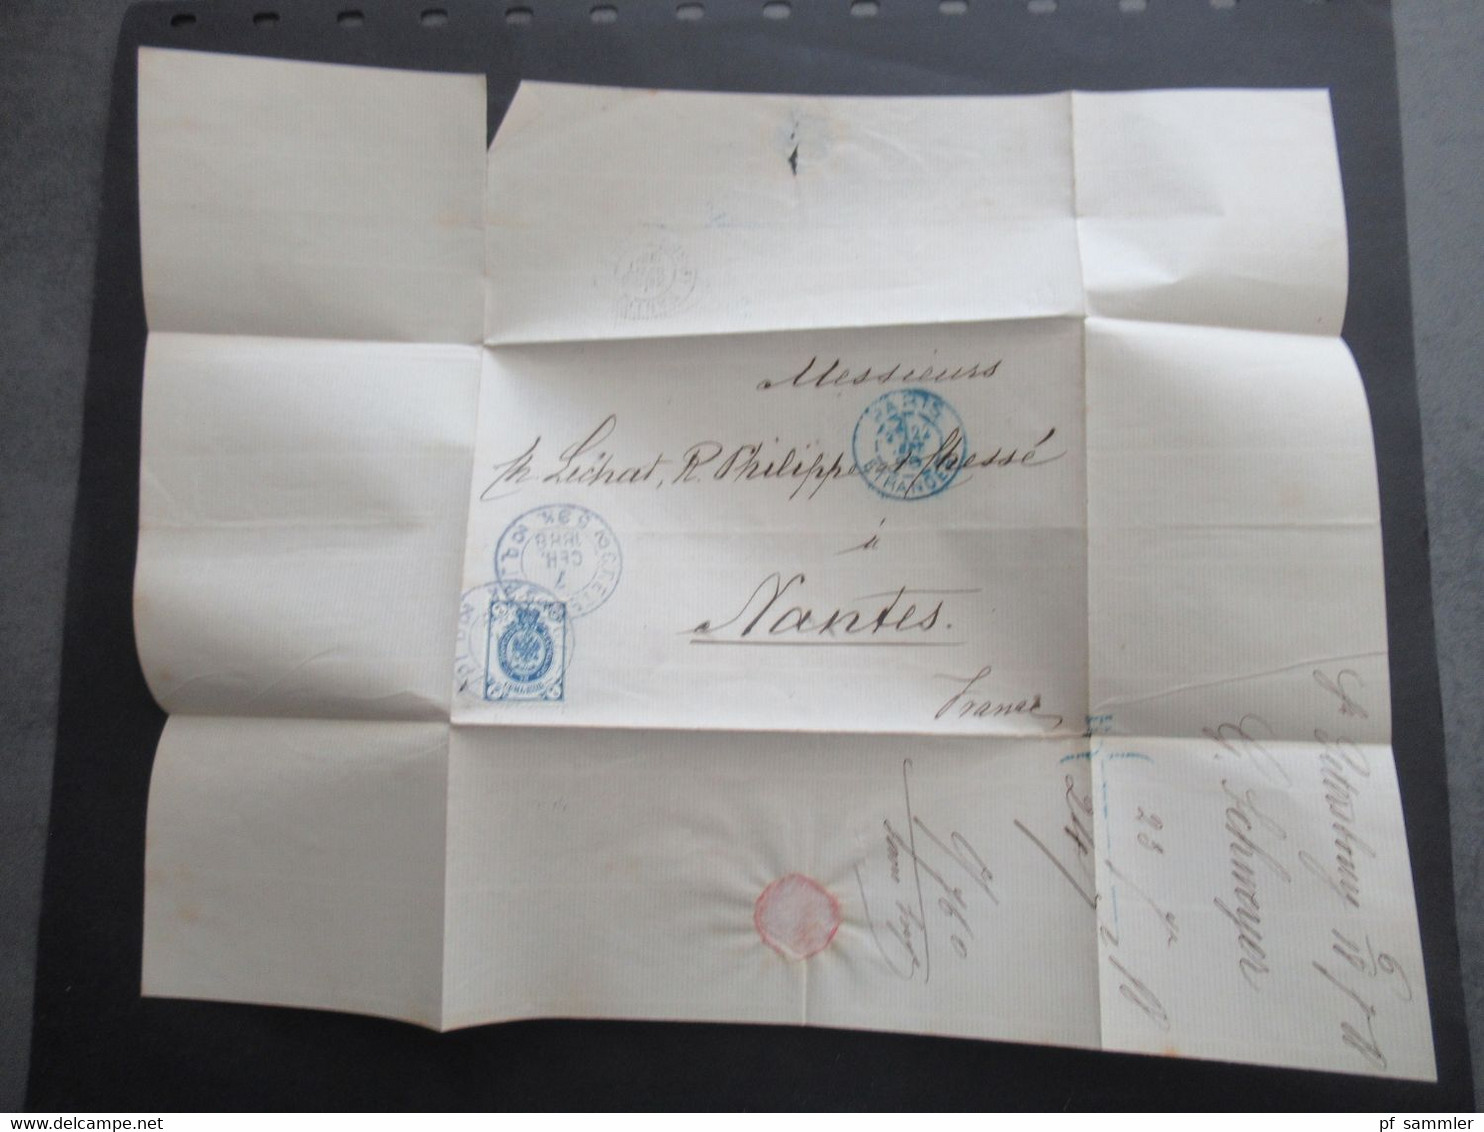 Russland 1888 Transit Brief St. Petersburg nach Nantes über Paris mit blauem Stempel Paris Etranger